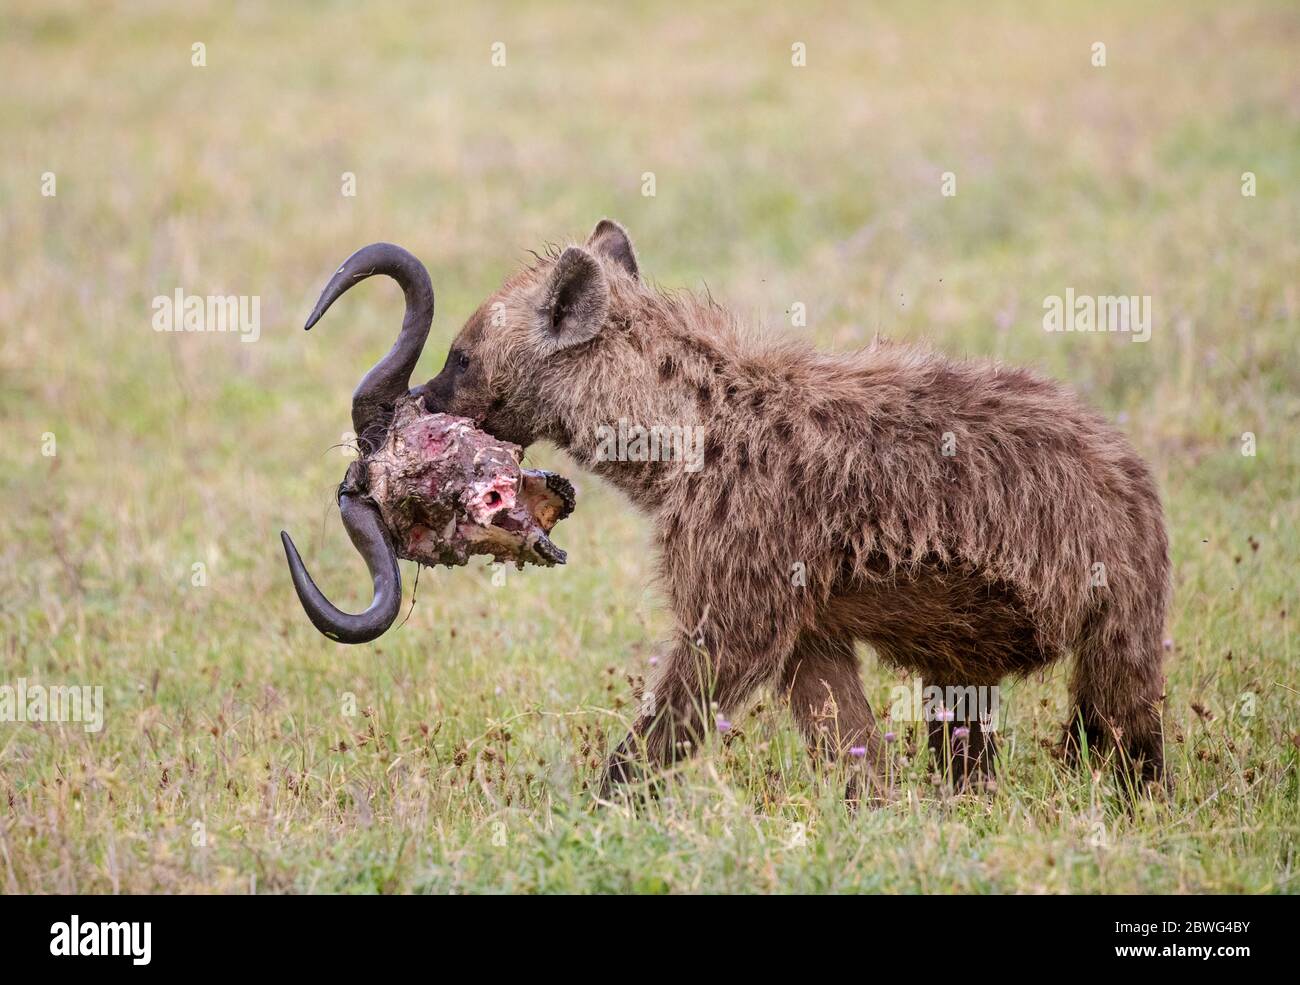 Spotted hyena (Crocuta crocuta) carrying head of prey, Ngorongoro Conservation Area, Tanzania, Africa Stock Photo